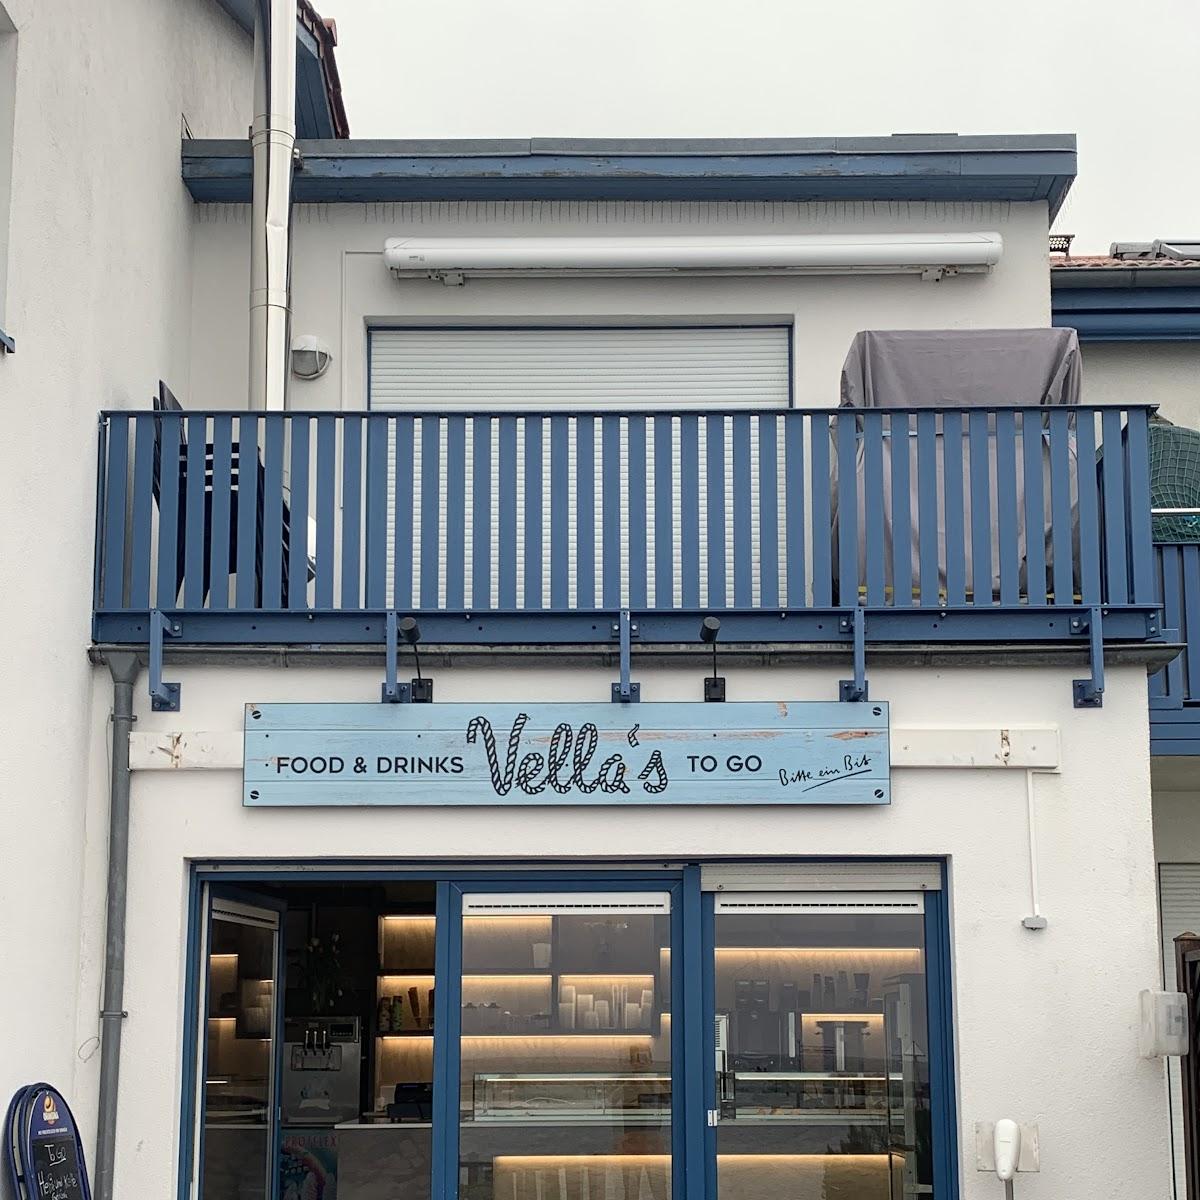 Restaurant "Vella ‘s Restaurant & Loungebar" in Insel Poel